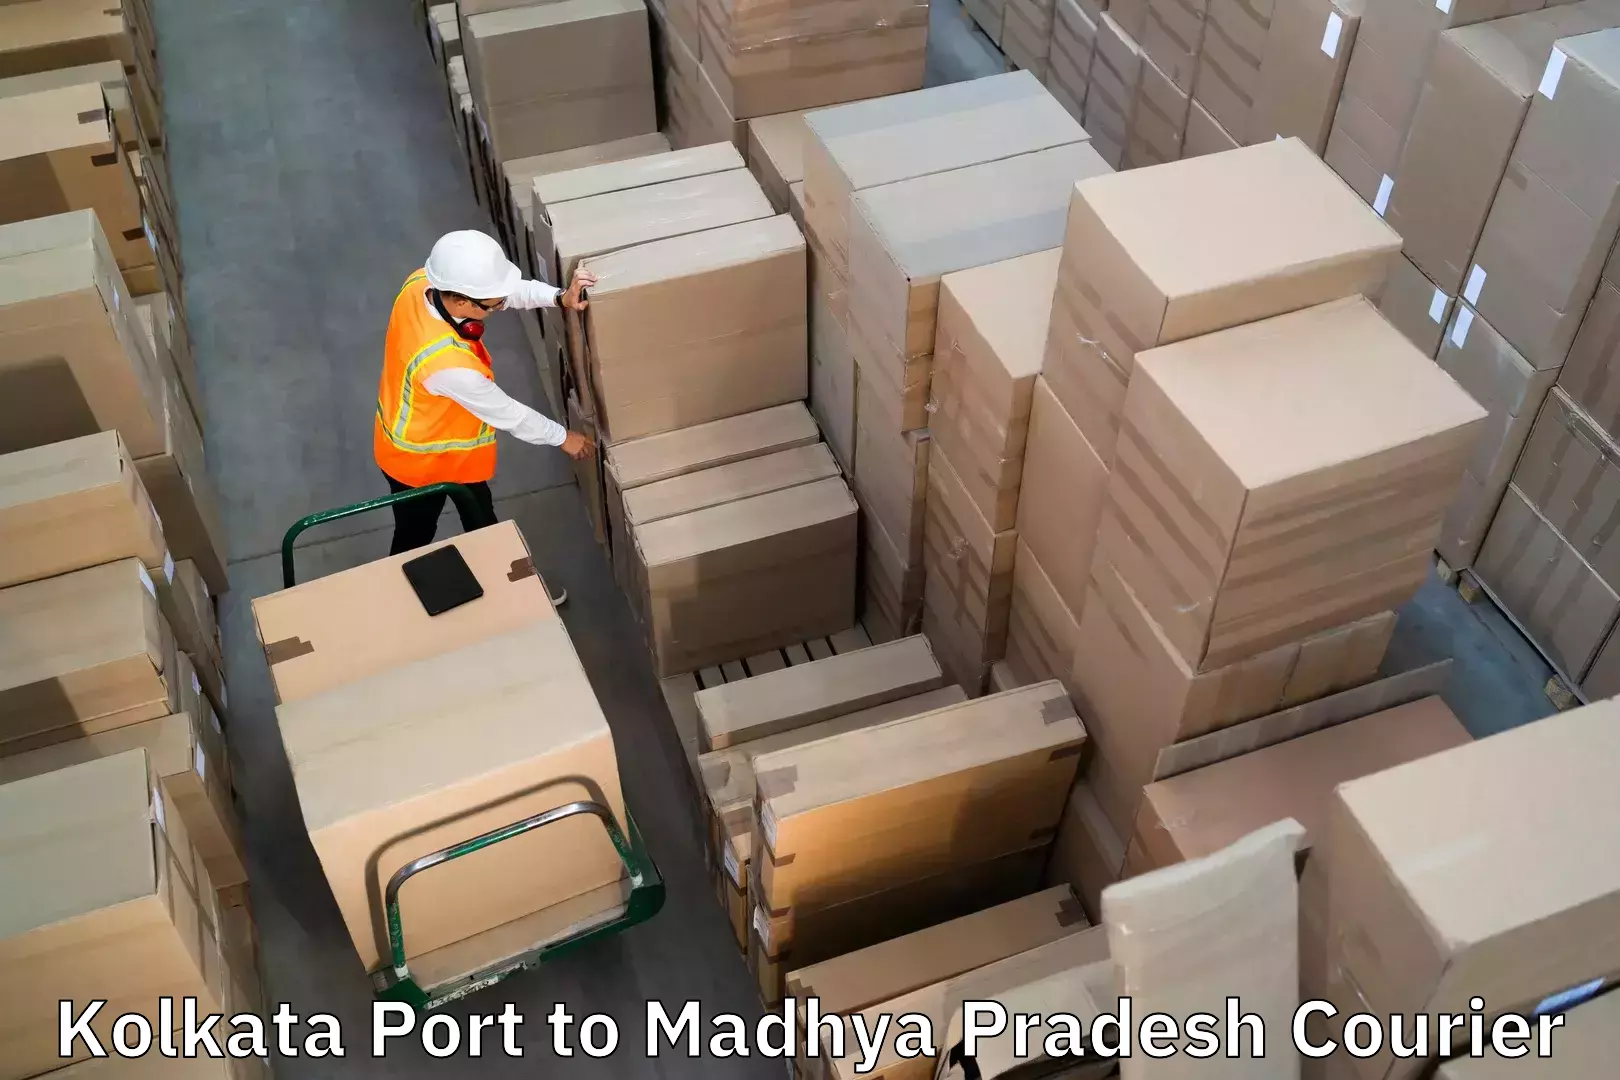 Luggage delivery system Kolkata Port to Sagar